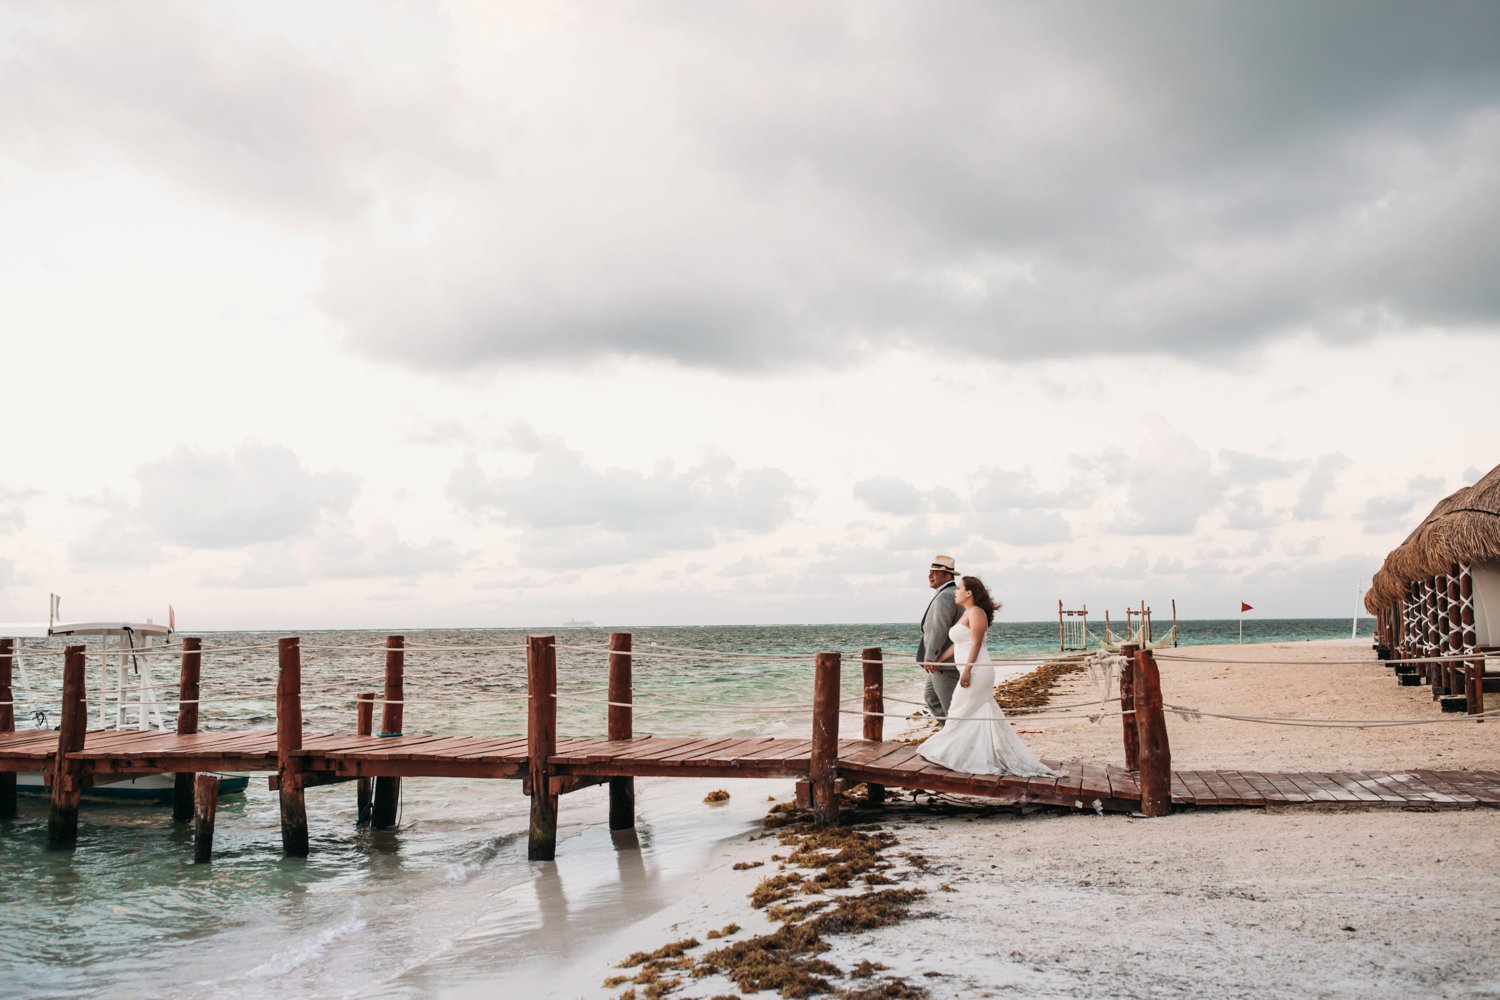  images by feliciathephotographer.com | destination wedding photographer | mexico | tropical | fiji | venue | azul beach resort | riviera maya | sunrise picture | bridal portraits | palm trees | romantic | barefoot | walking by the ocean | 